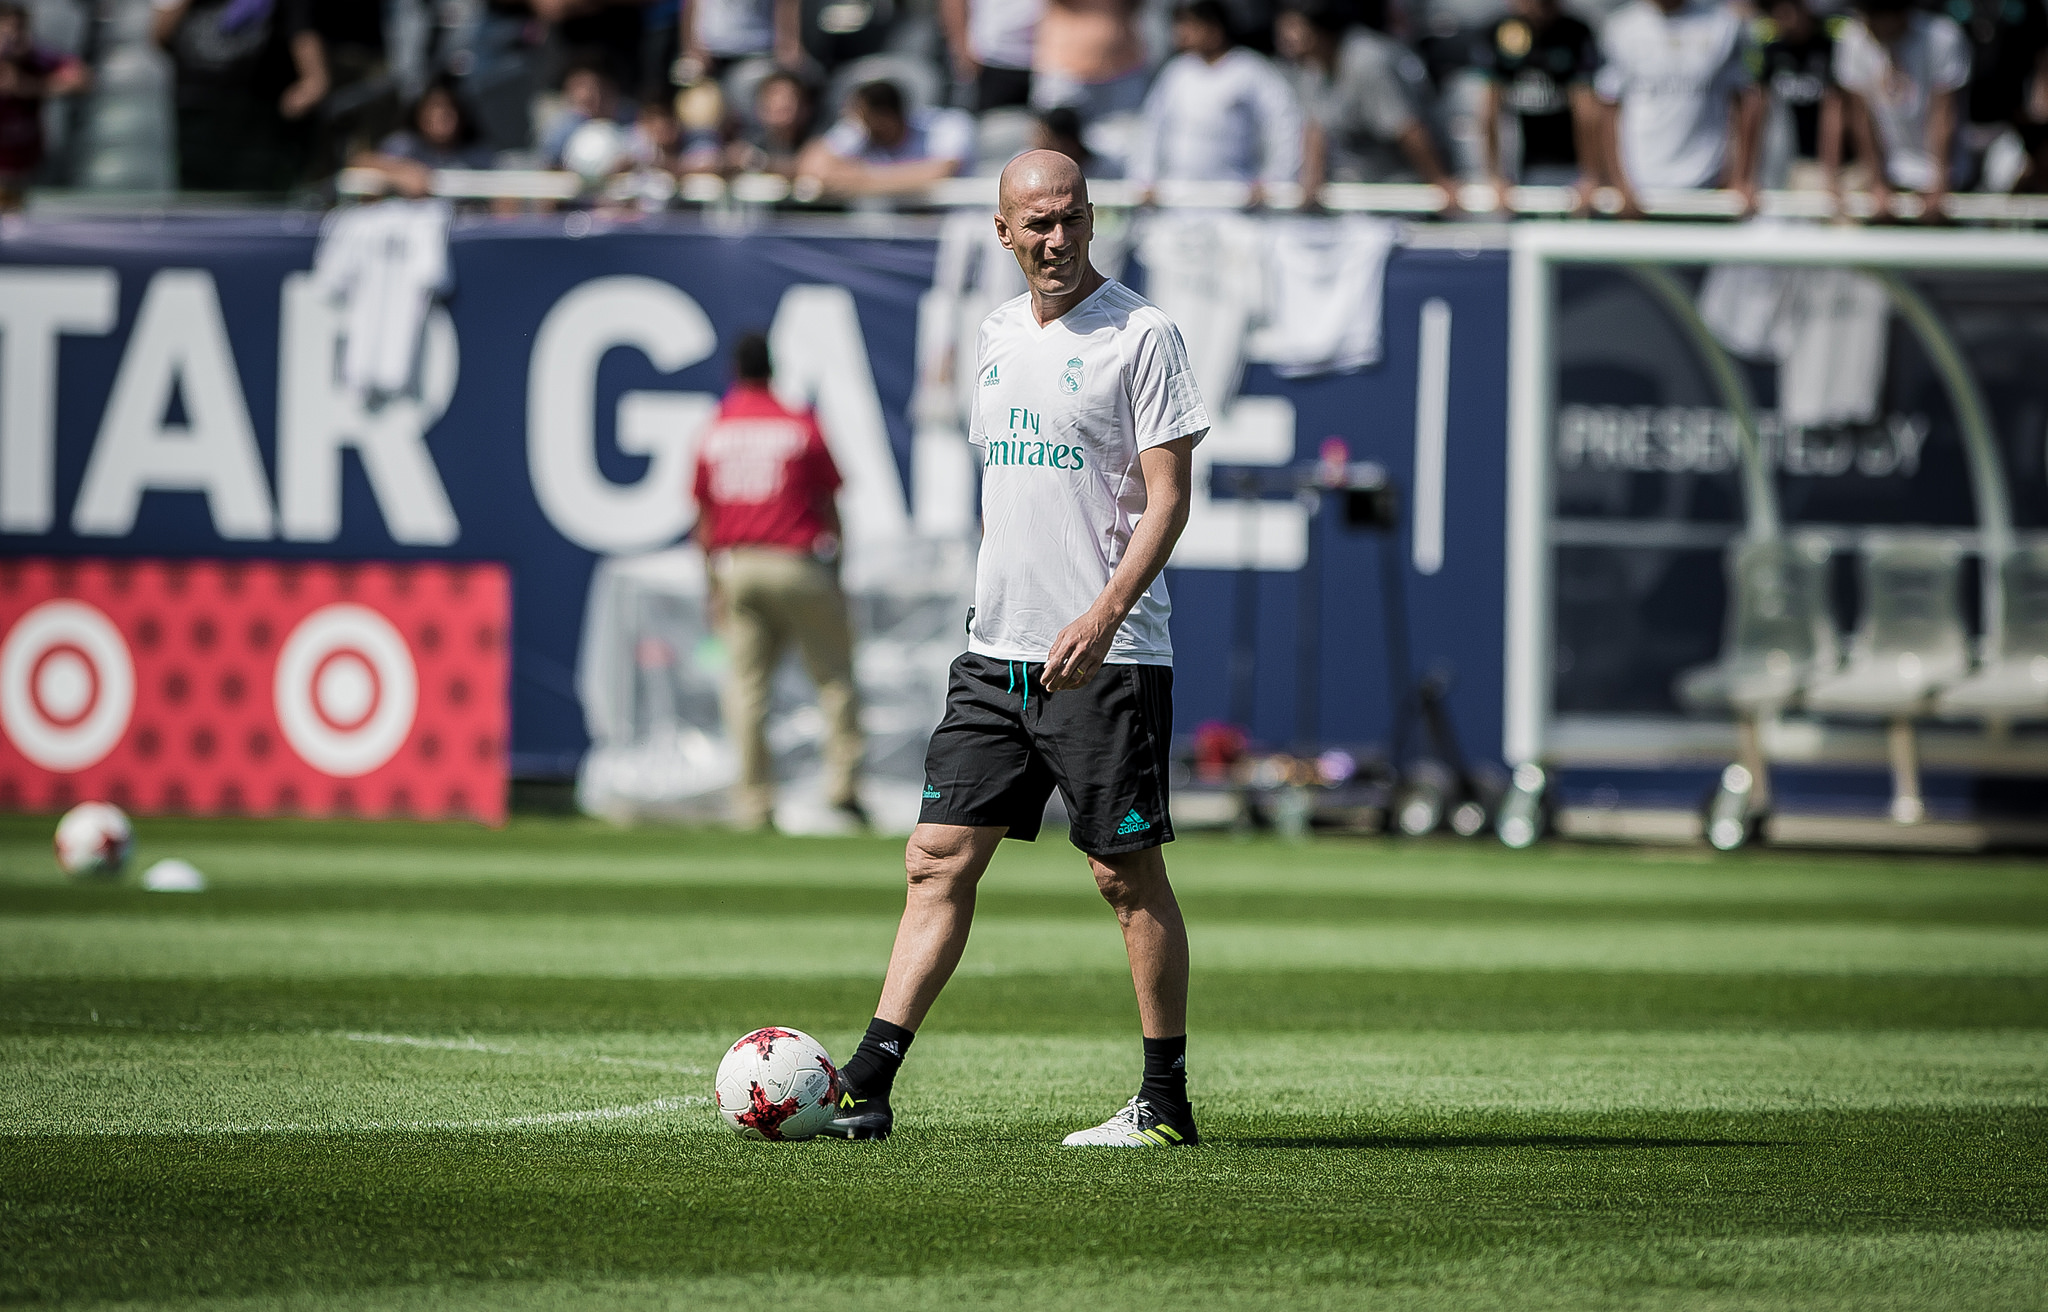 Zinedine Zidane - Zizou - رئال مادرید - پیش فصل رئال مادرید - کهکشانی ها - لوس بلانکوس - Los Blancos - Galacticos - Real Madrid - Real Madrid Pre-Season